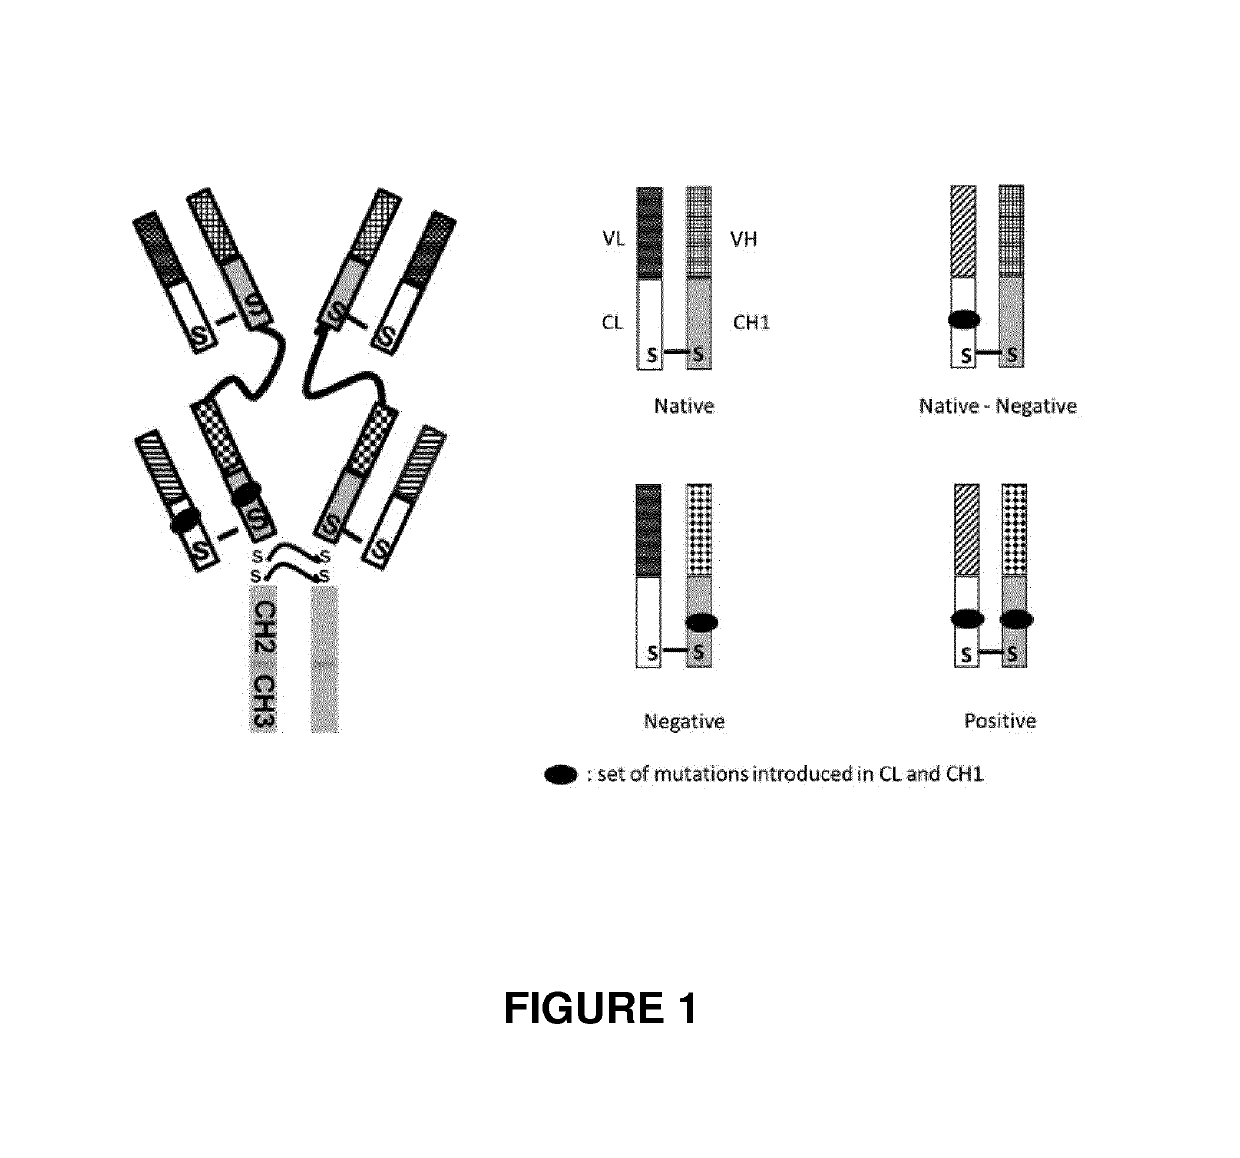 Bispecific antibodies targeting EGFR and her2